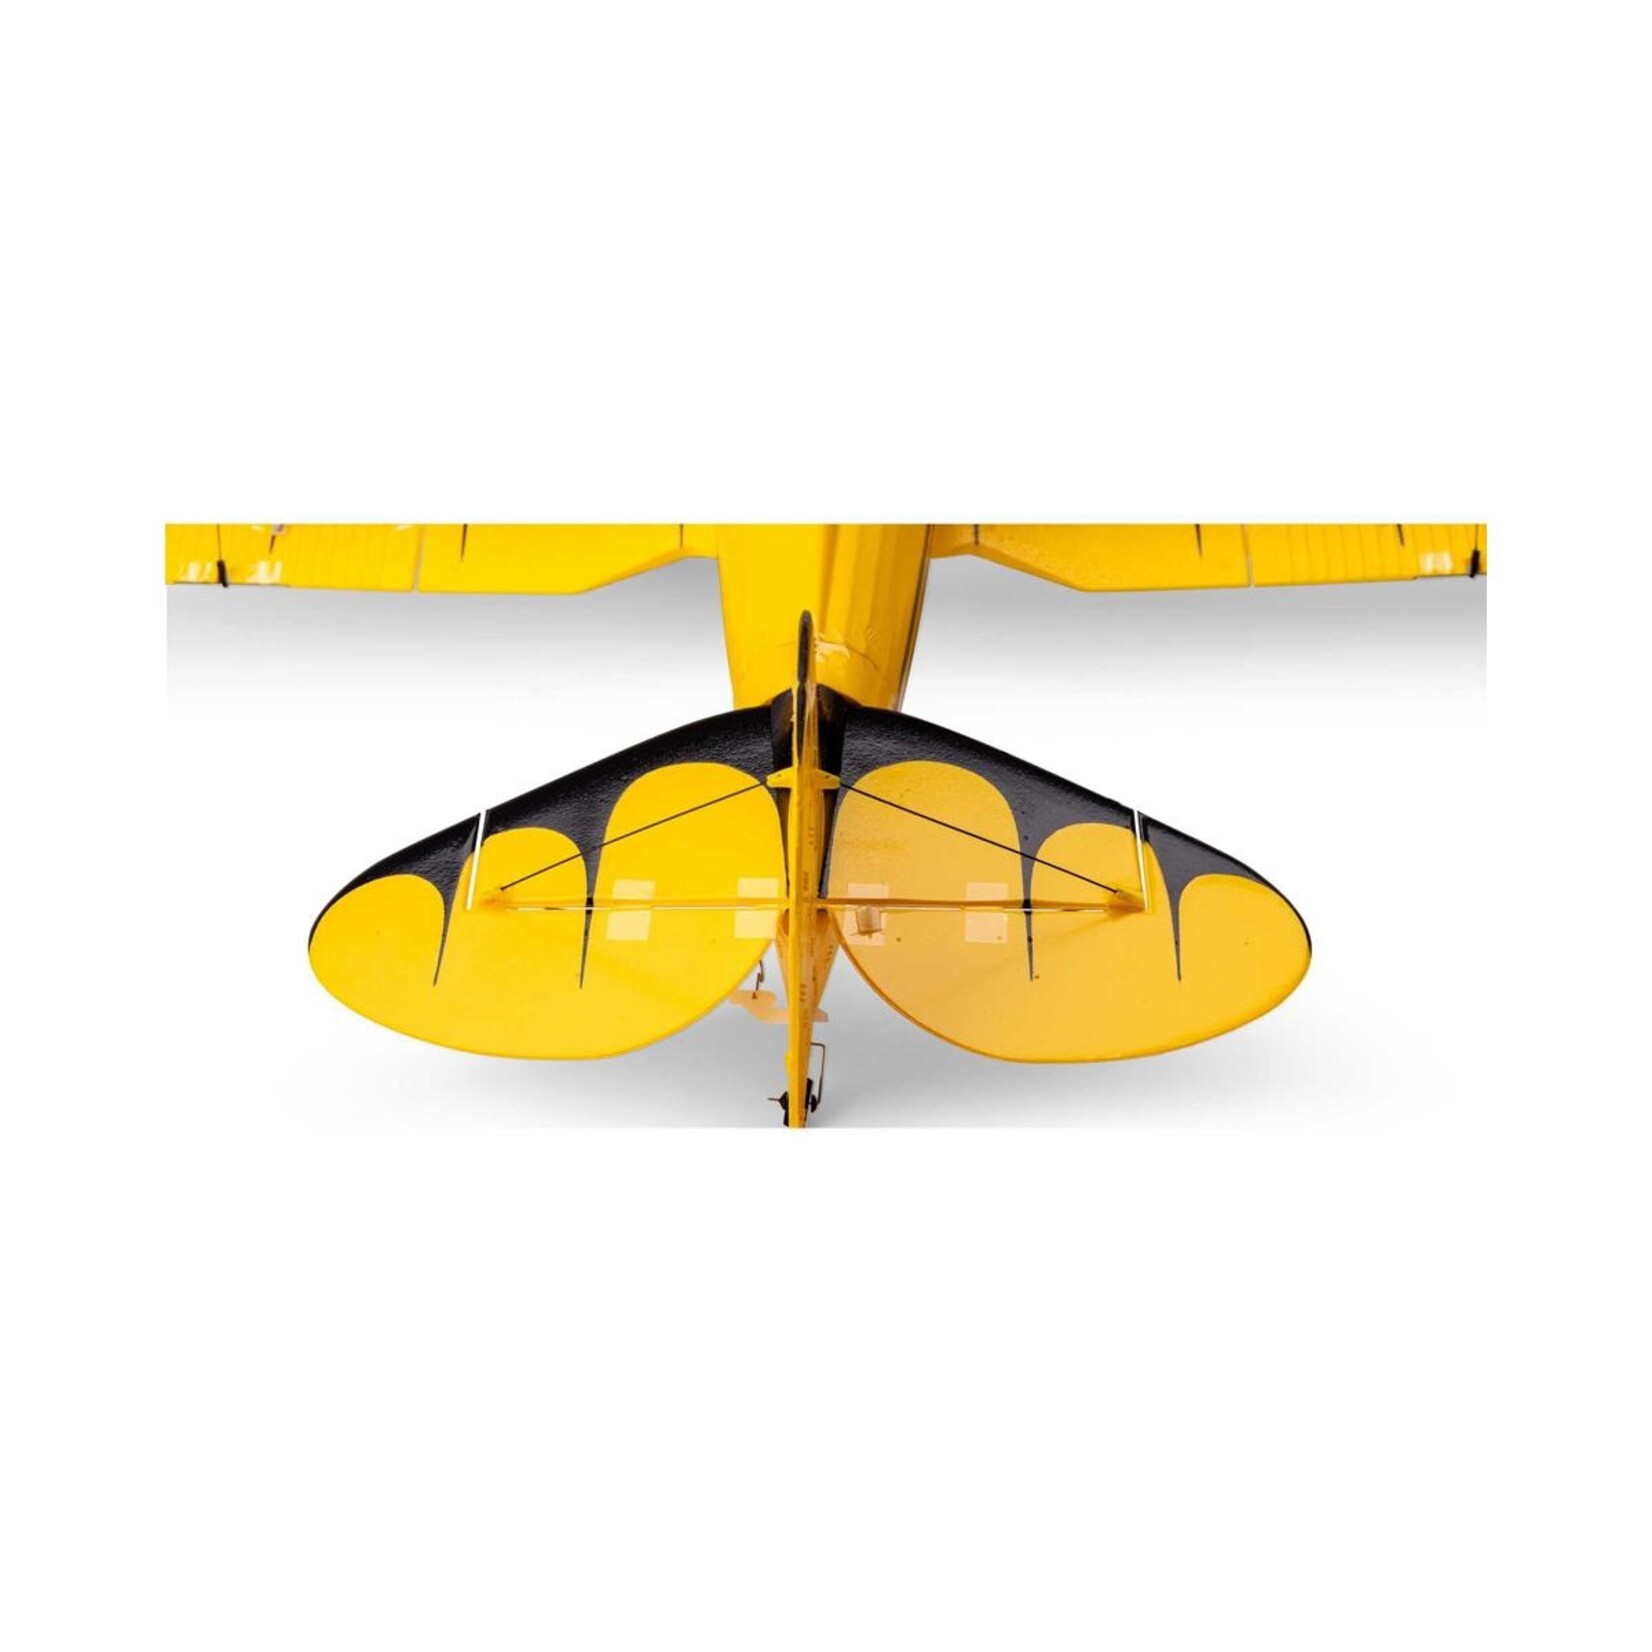 E-flite E-flite Ultra-Micro UMX Waco BNF Basic Electric Airplane (550mm) (Yellow) w/AS3X & SAFE #EFLU53550Y